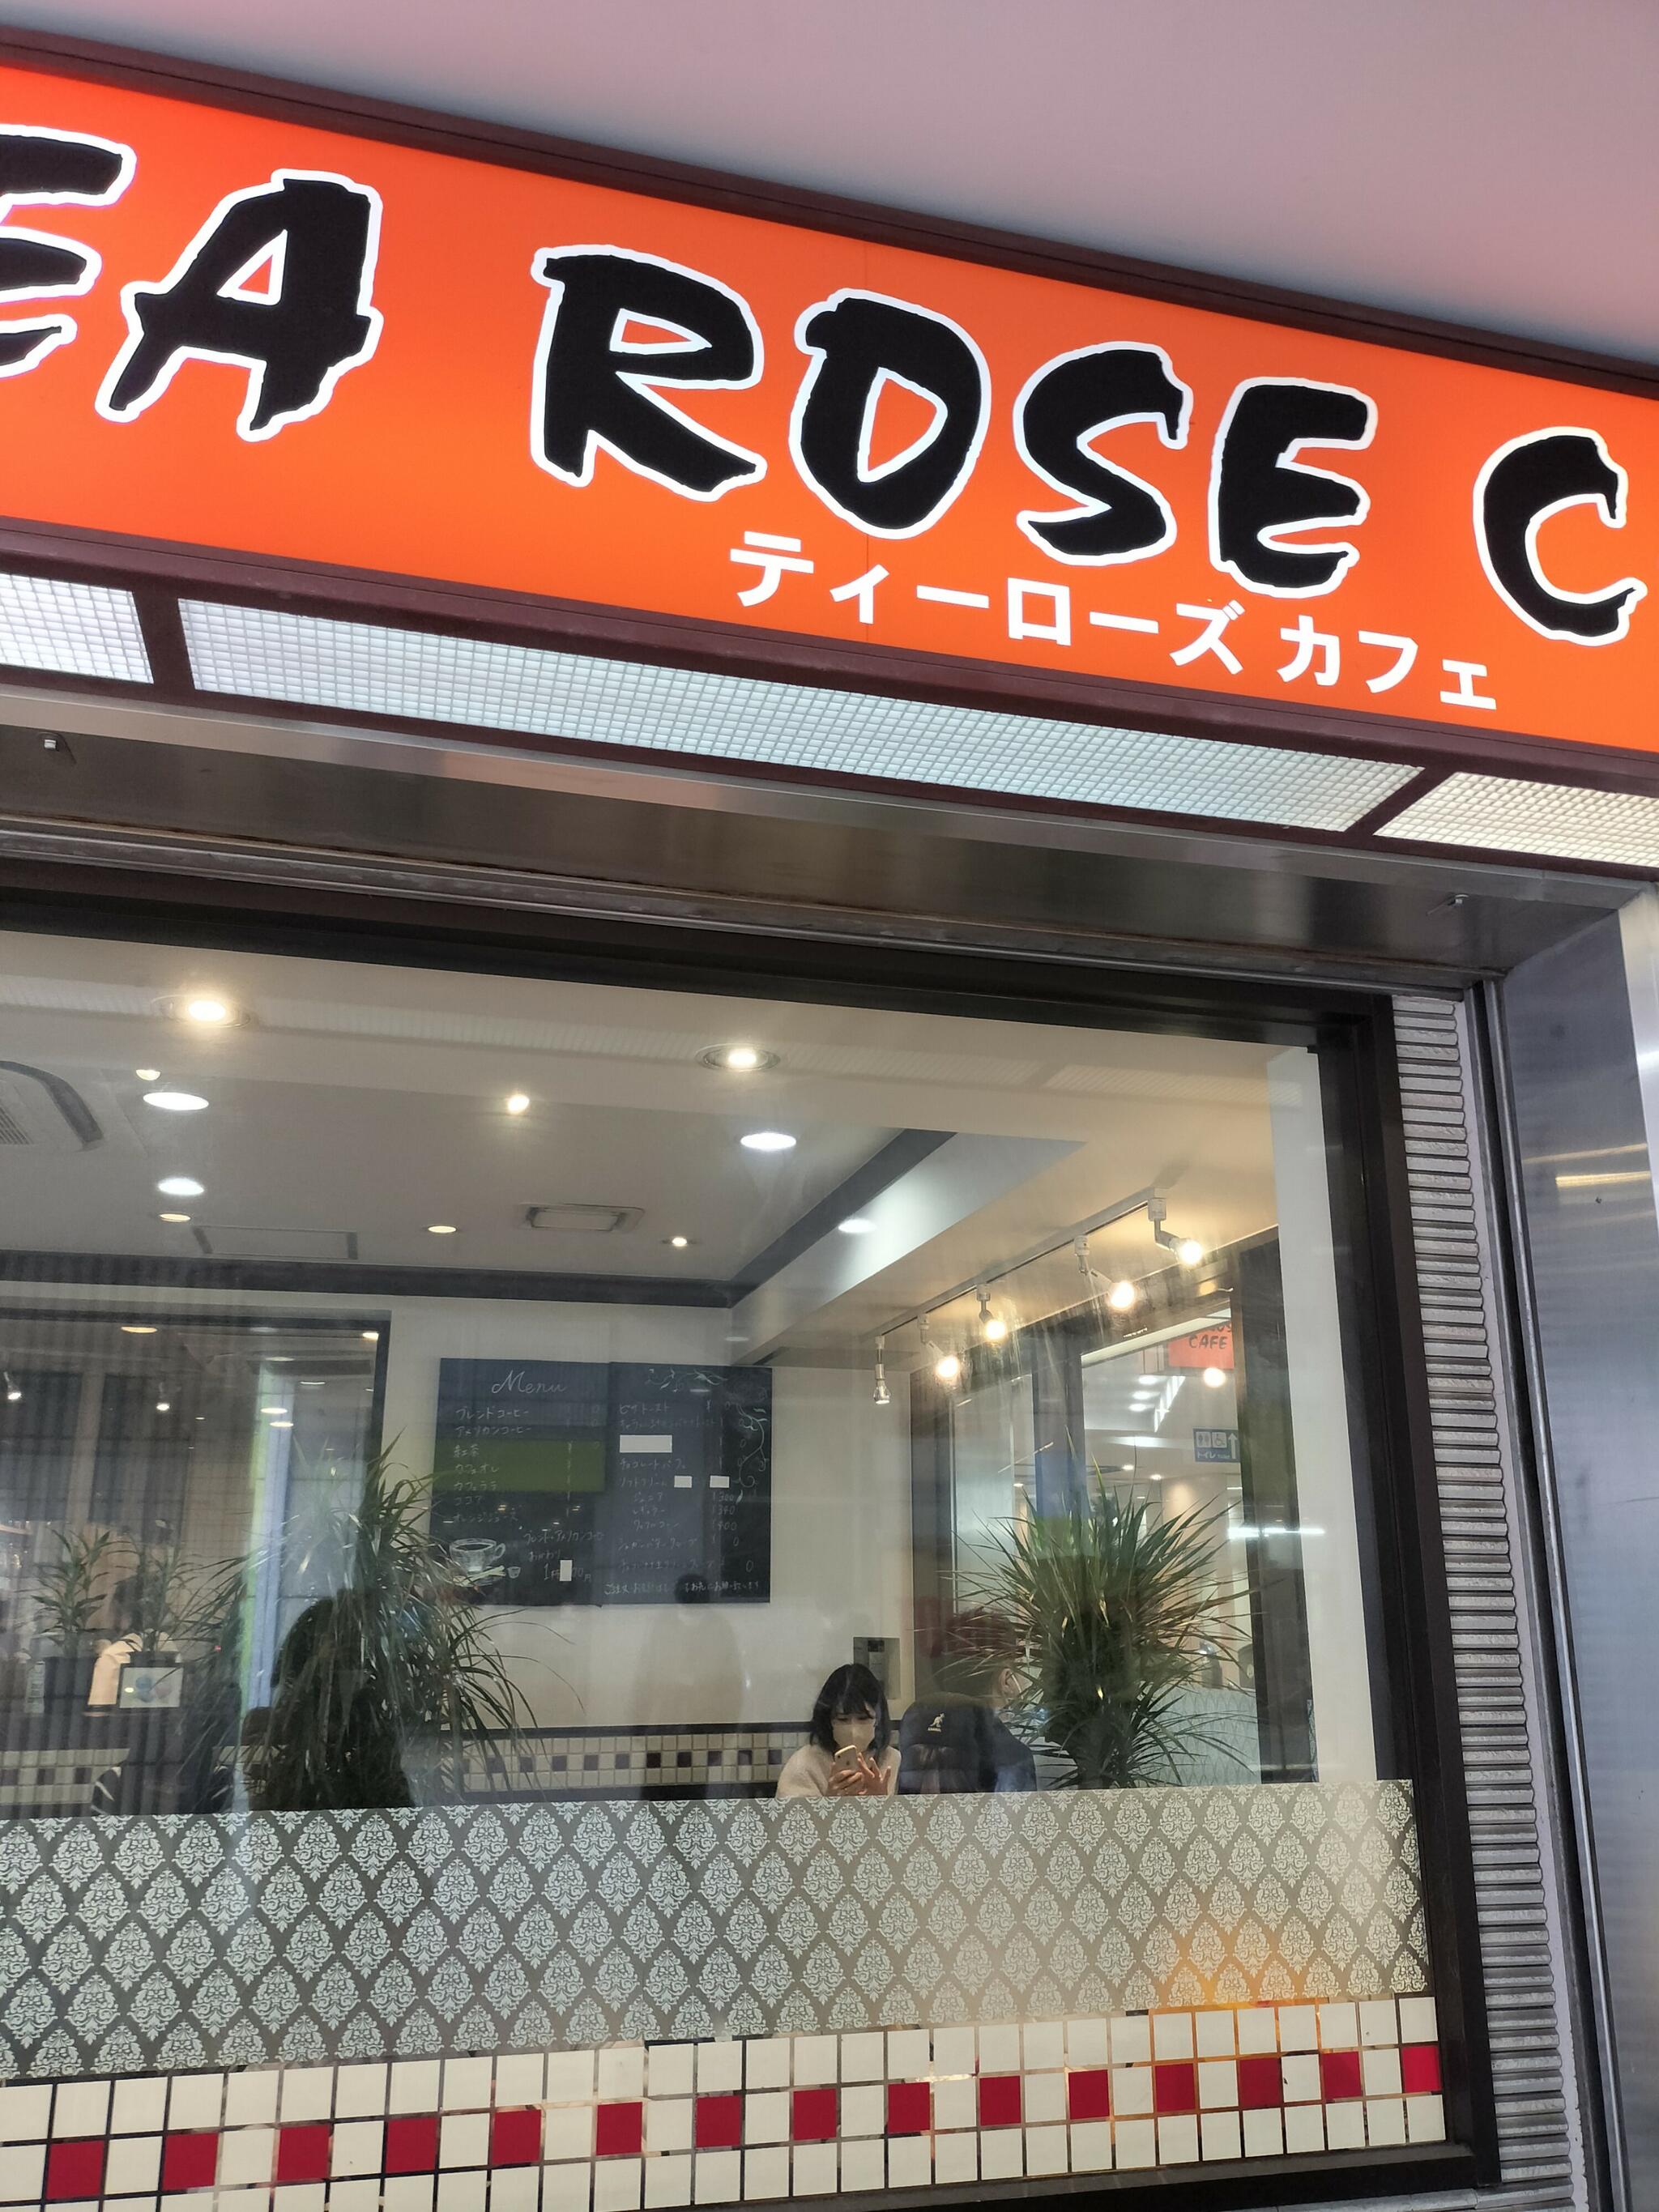 TEA ROSE CAFEの代表写真1